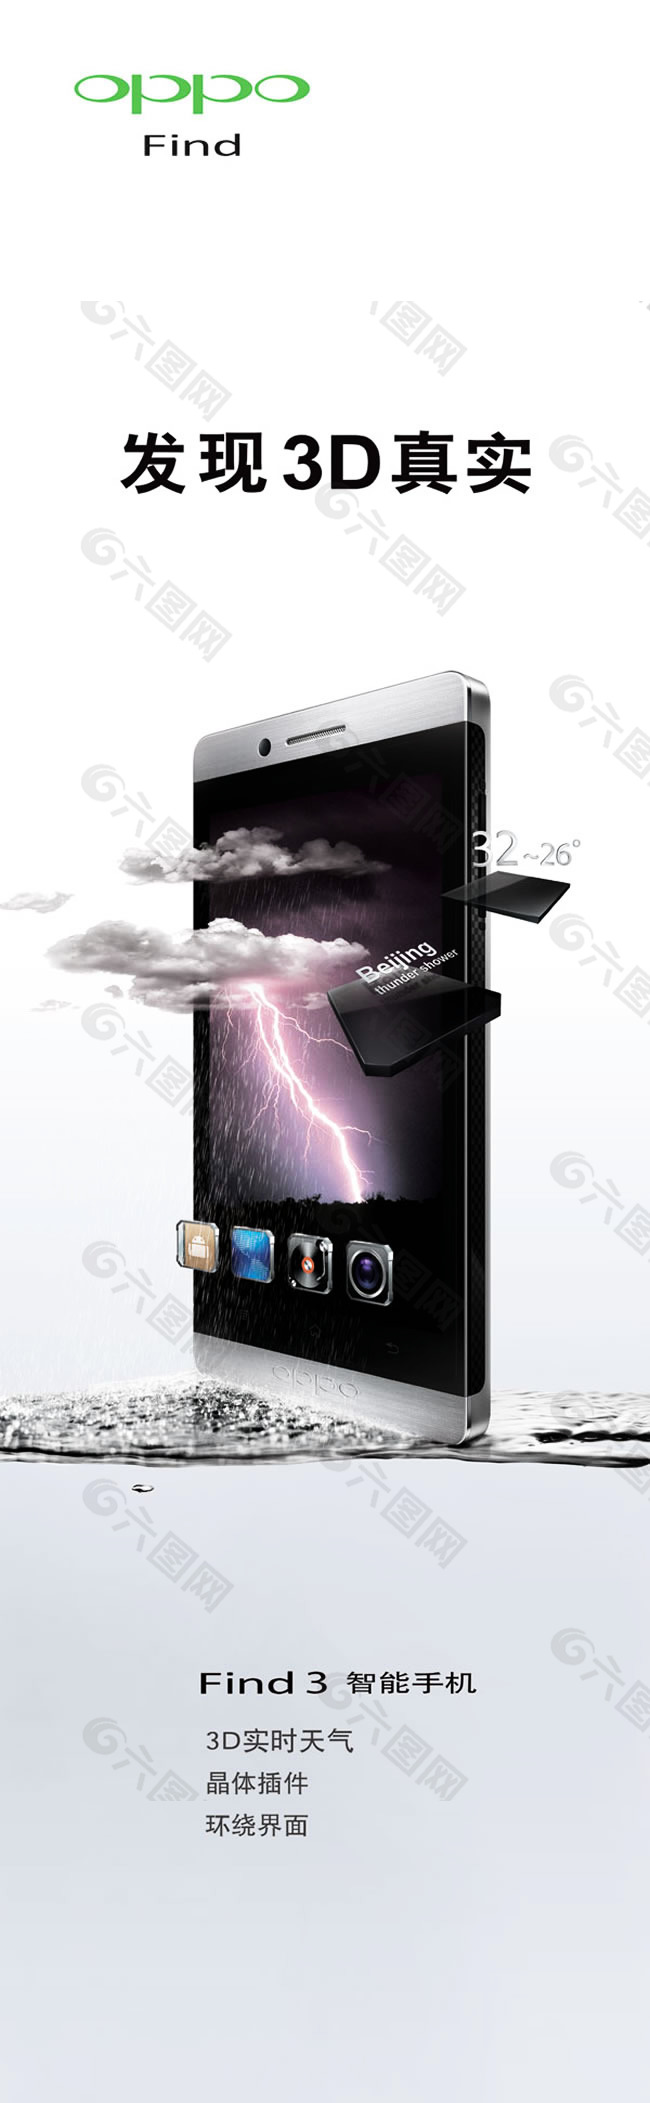 OPPO手机3D实时天气展架PSD素材